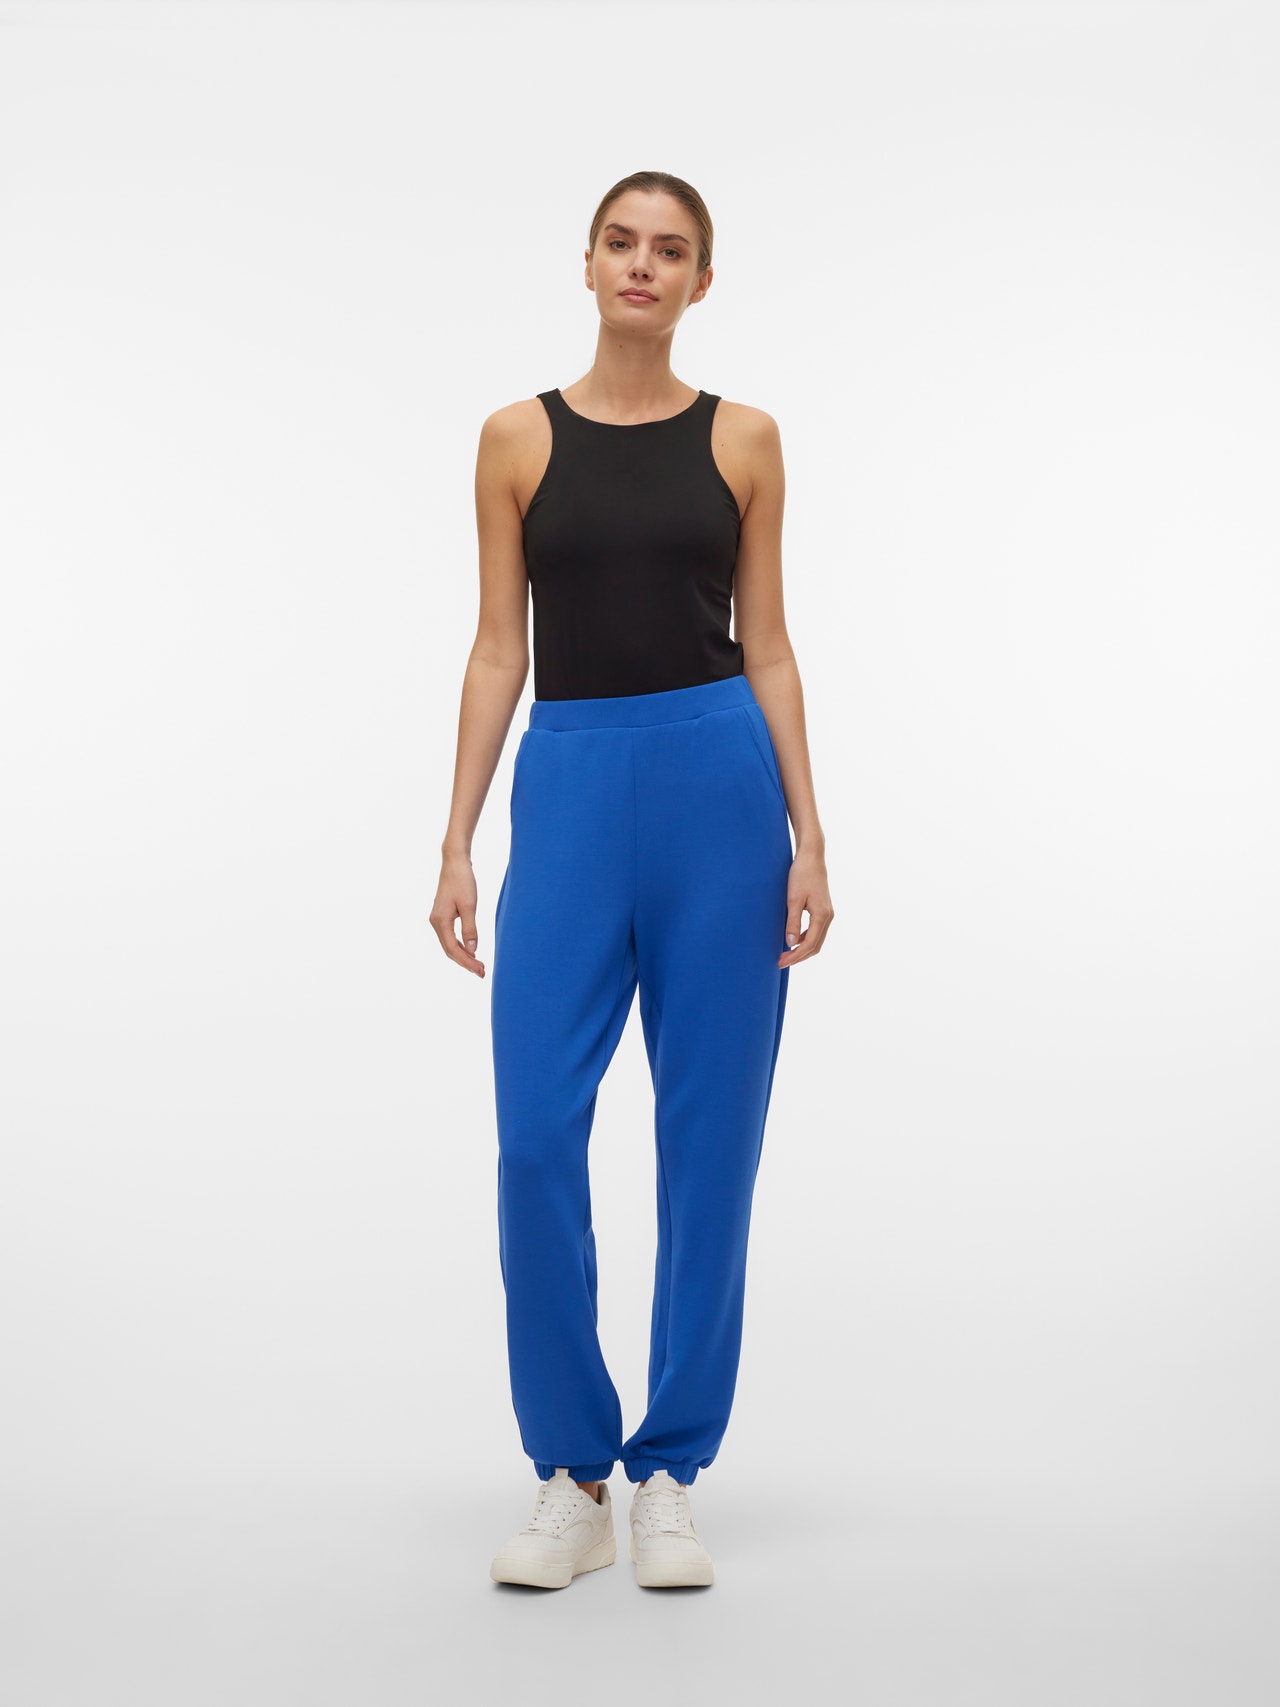 Vero Moda VMSILKY Trousers -Beaucoup Blue - 10302891